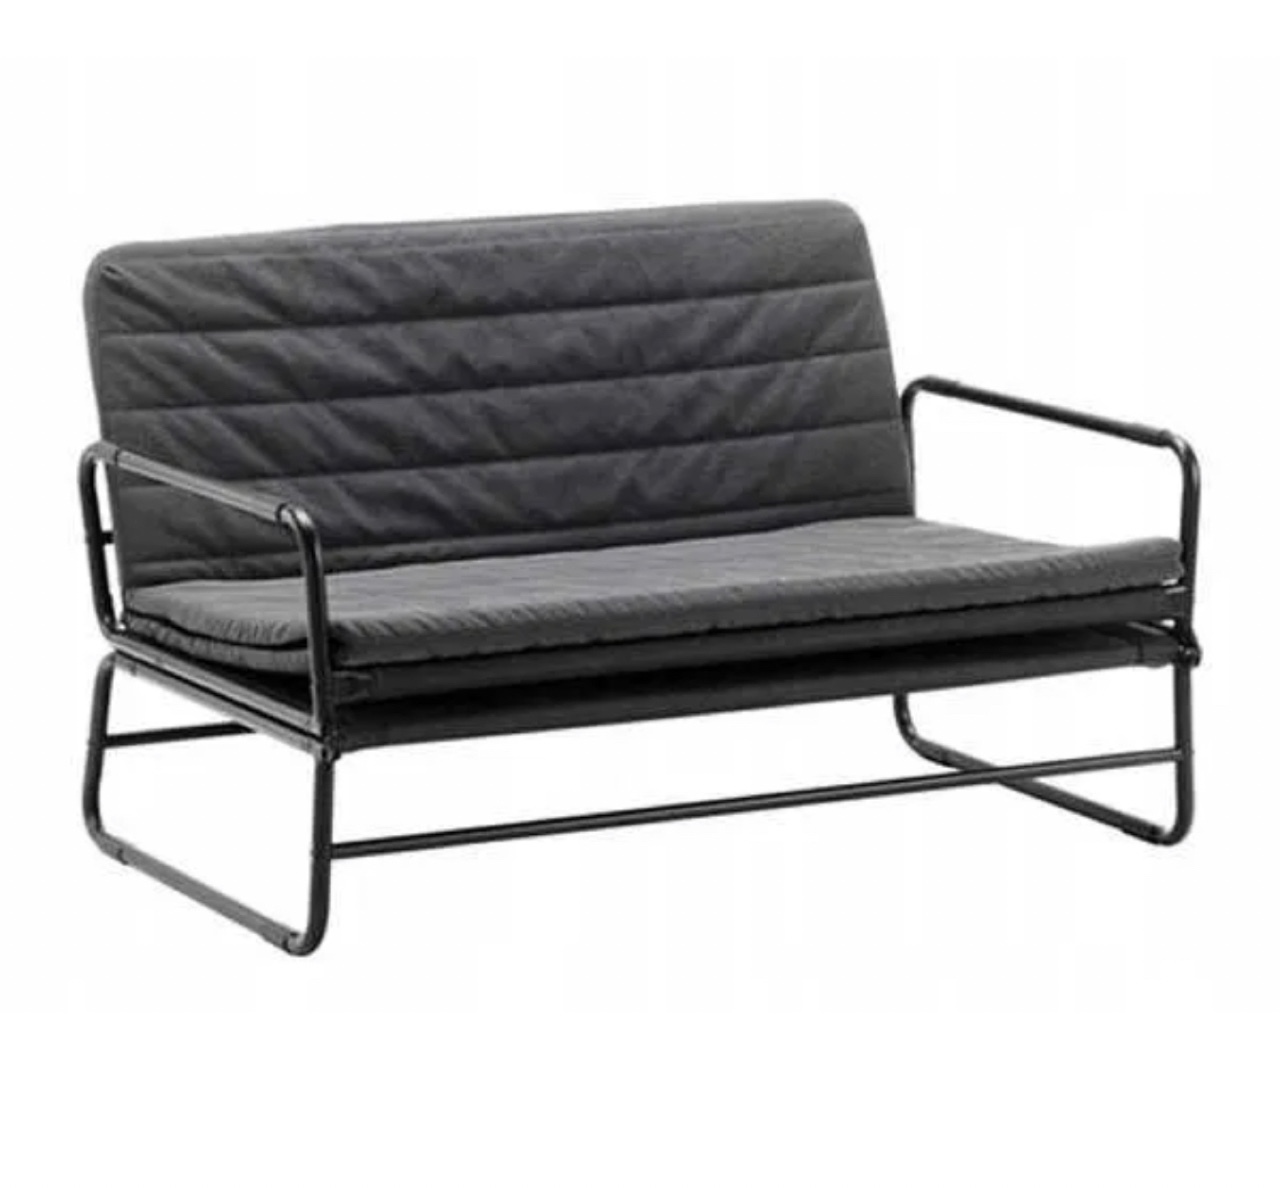 Gebeurt Subtropisch kraan IKEA Hammarn leżanka sofa szara składana kanapa | Łódź | Kup teraz na  Allegro Lokalnie